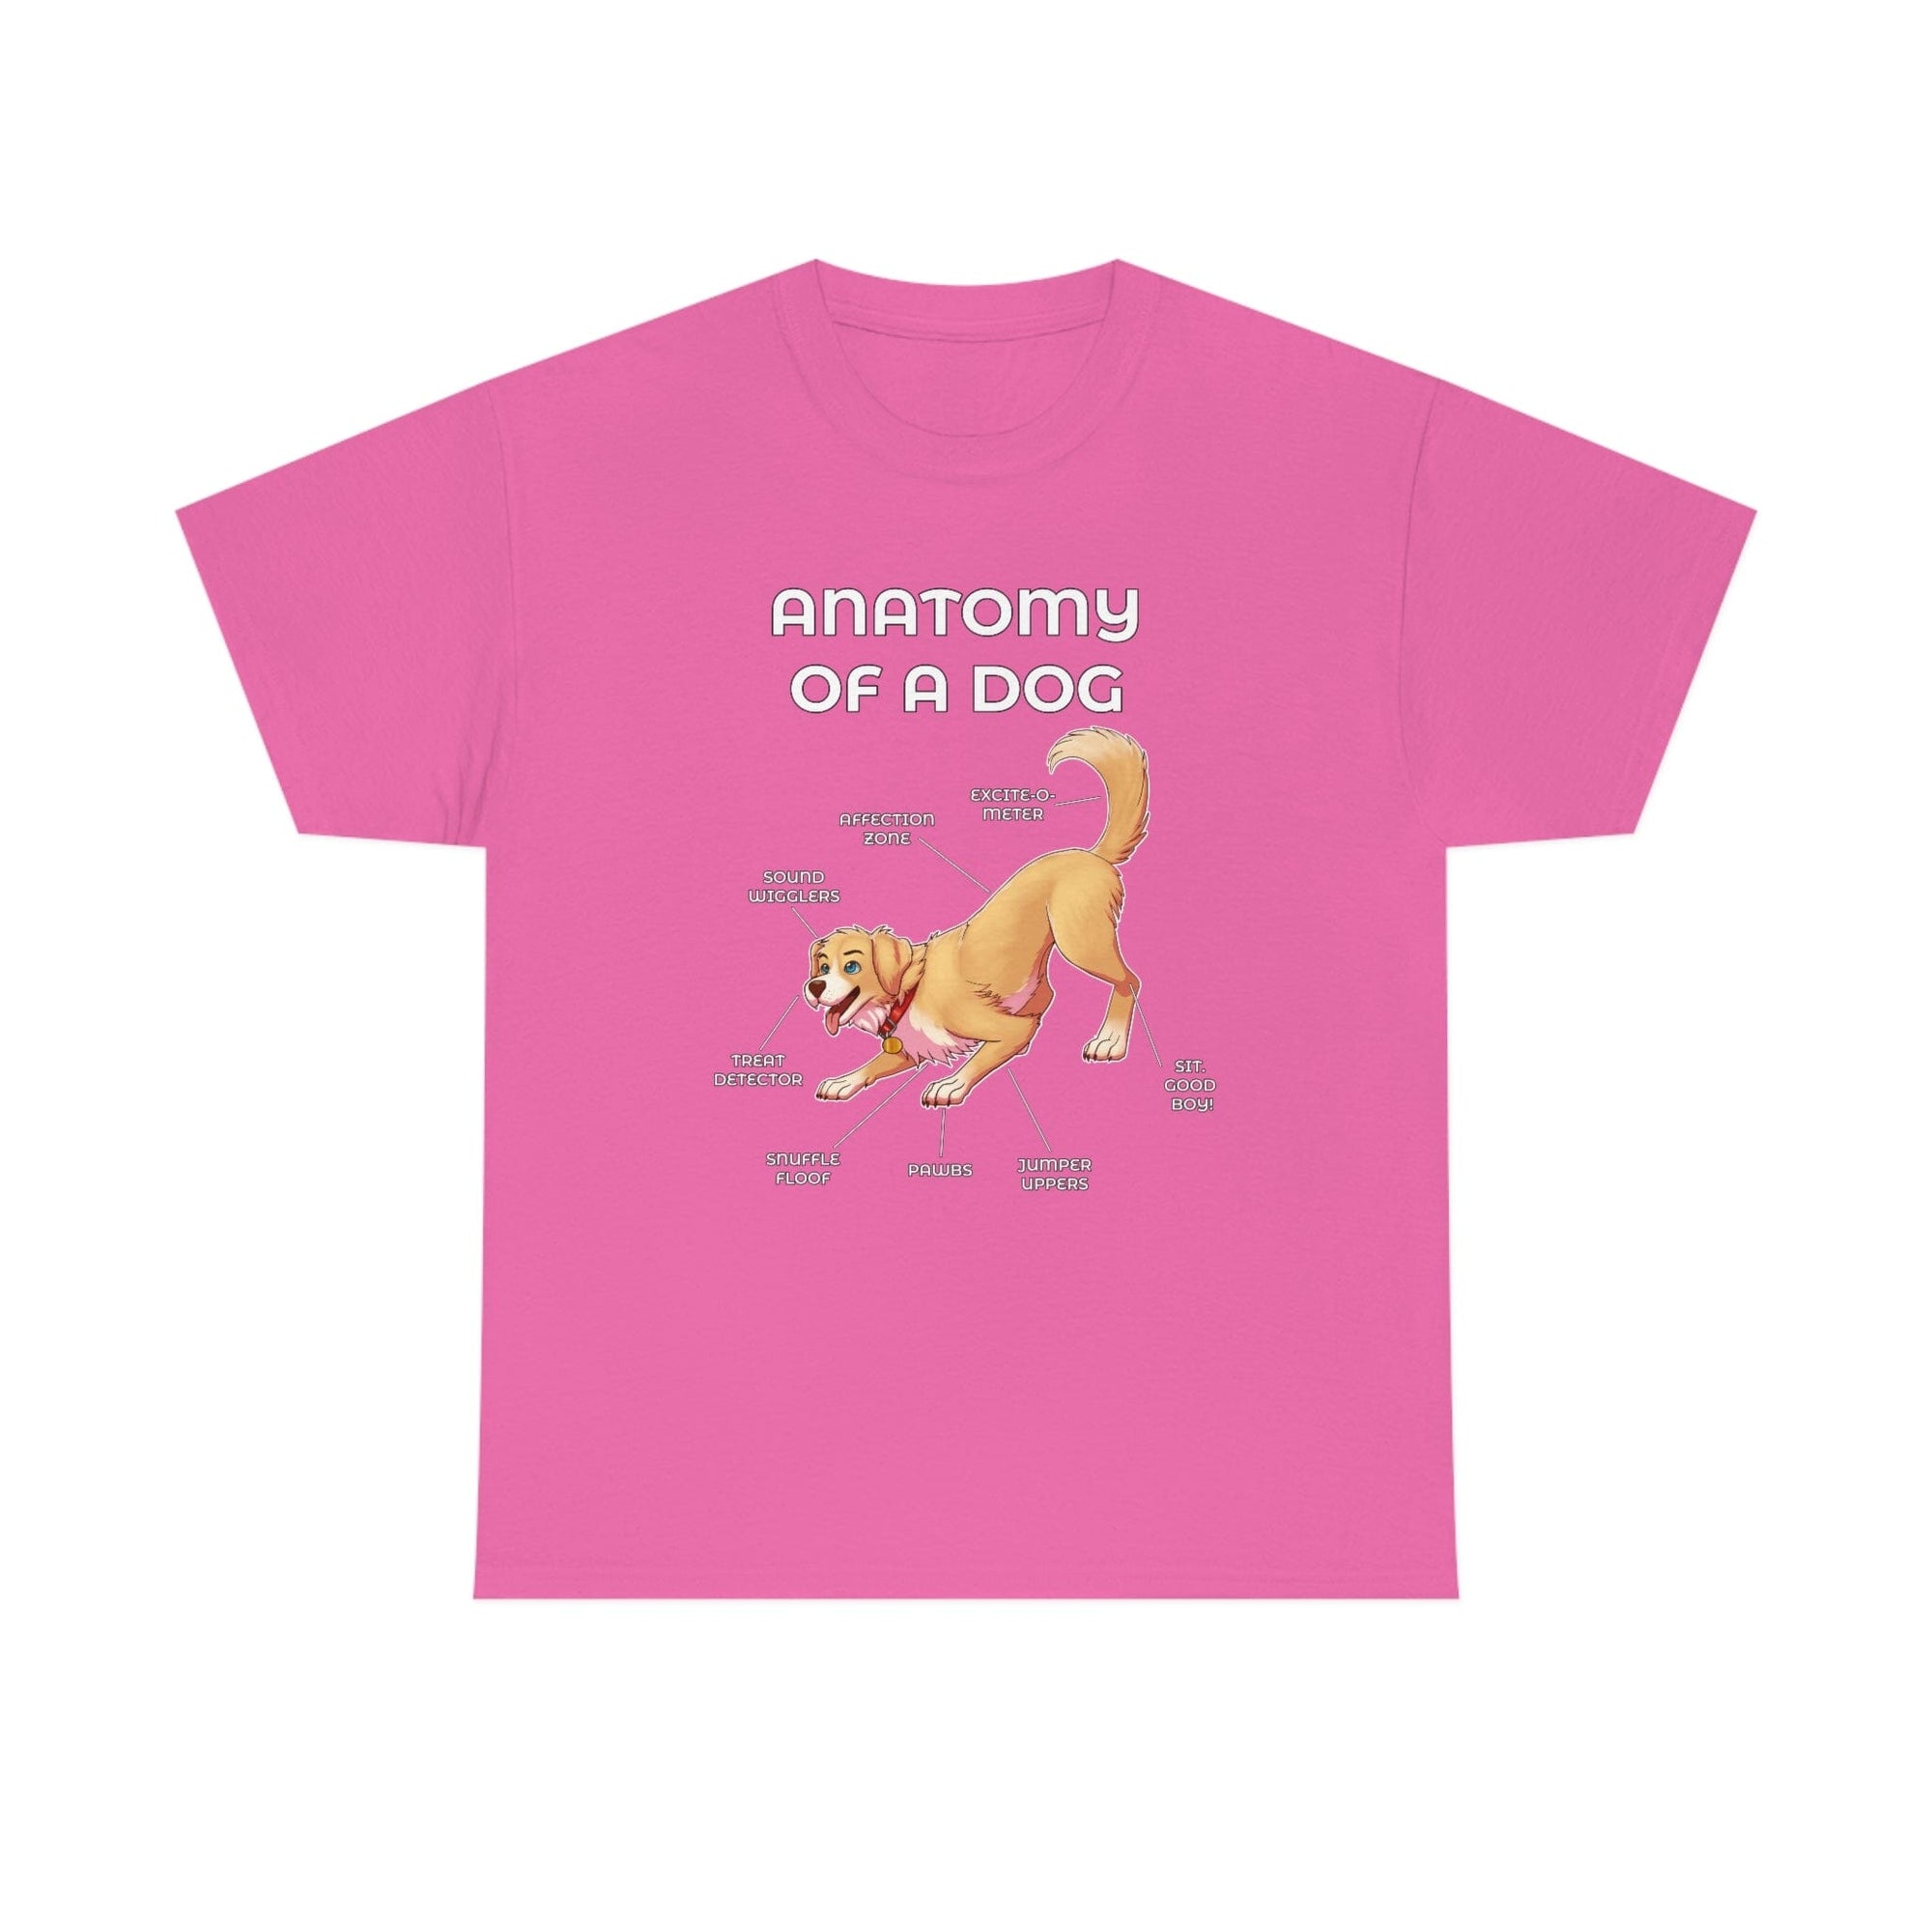 Dog Yellow - T-Shirt T-Shirt Artworktee Pink S 